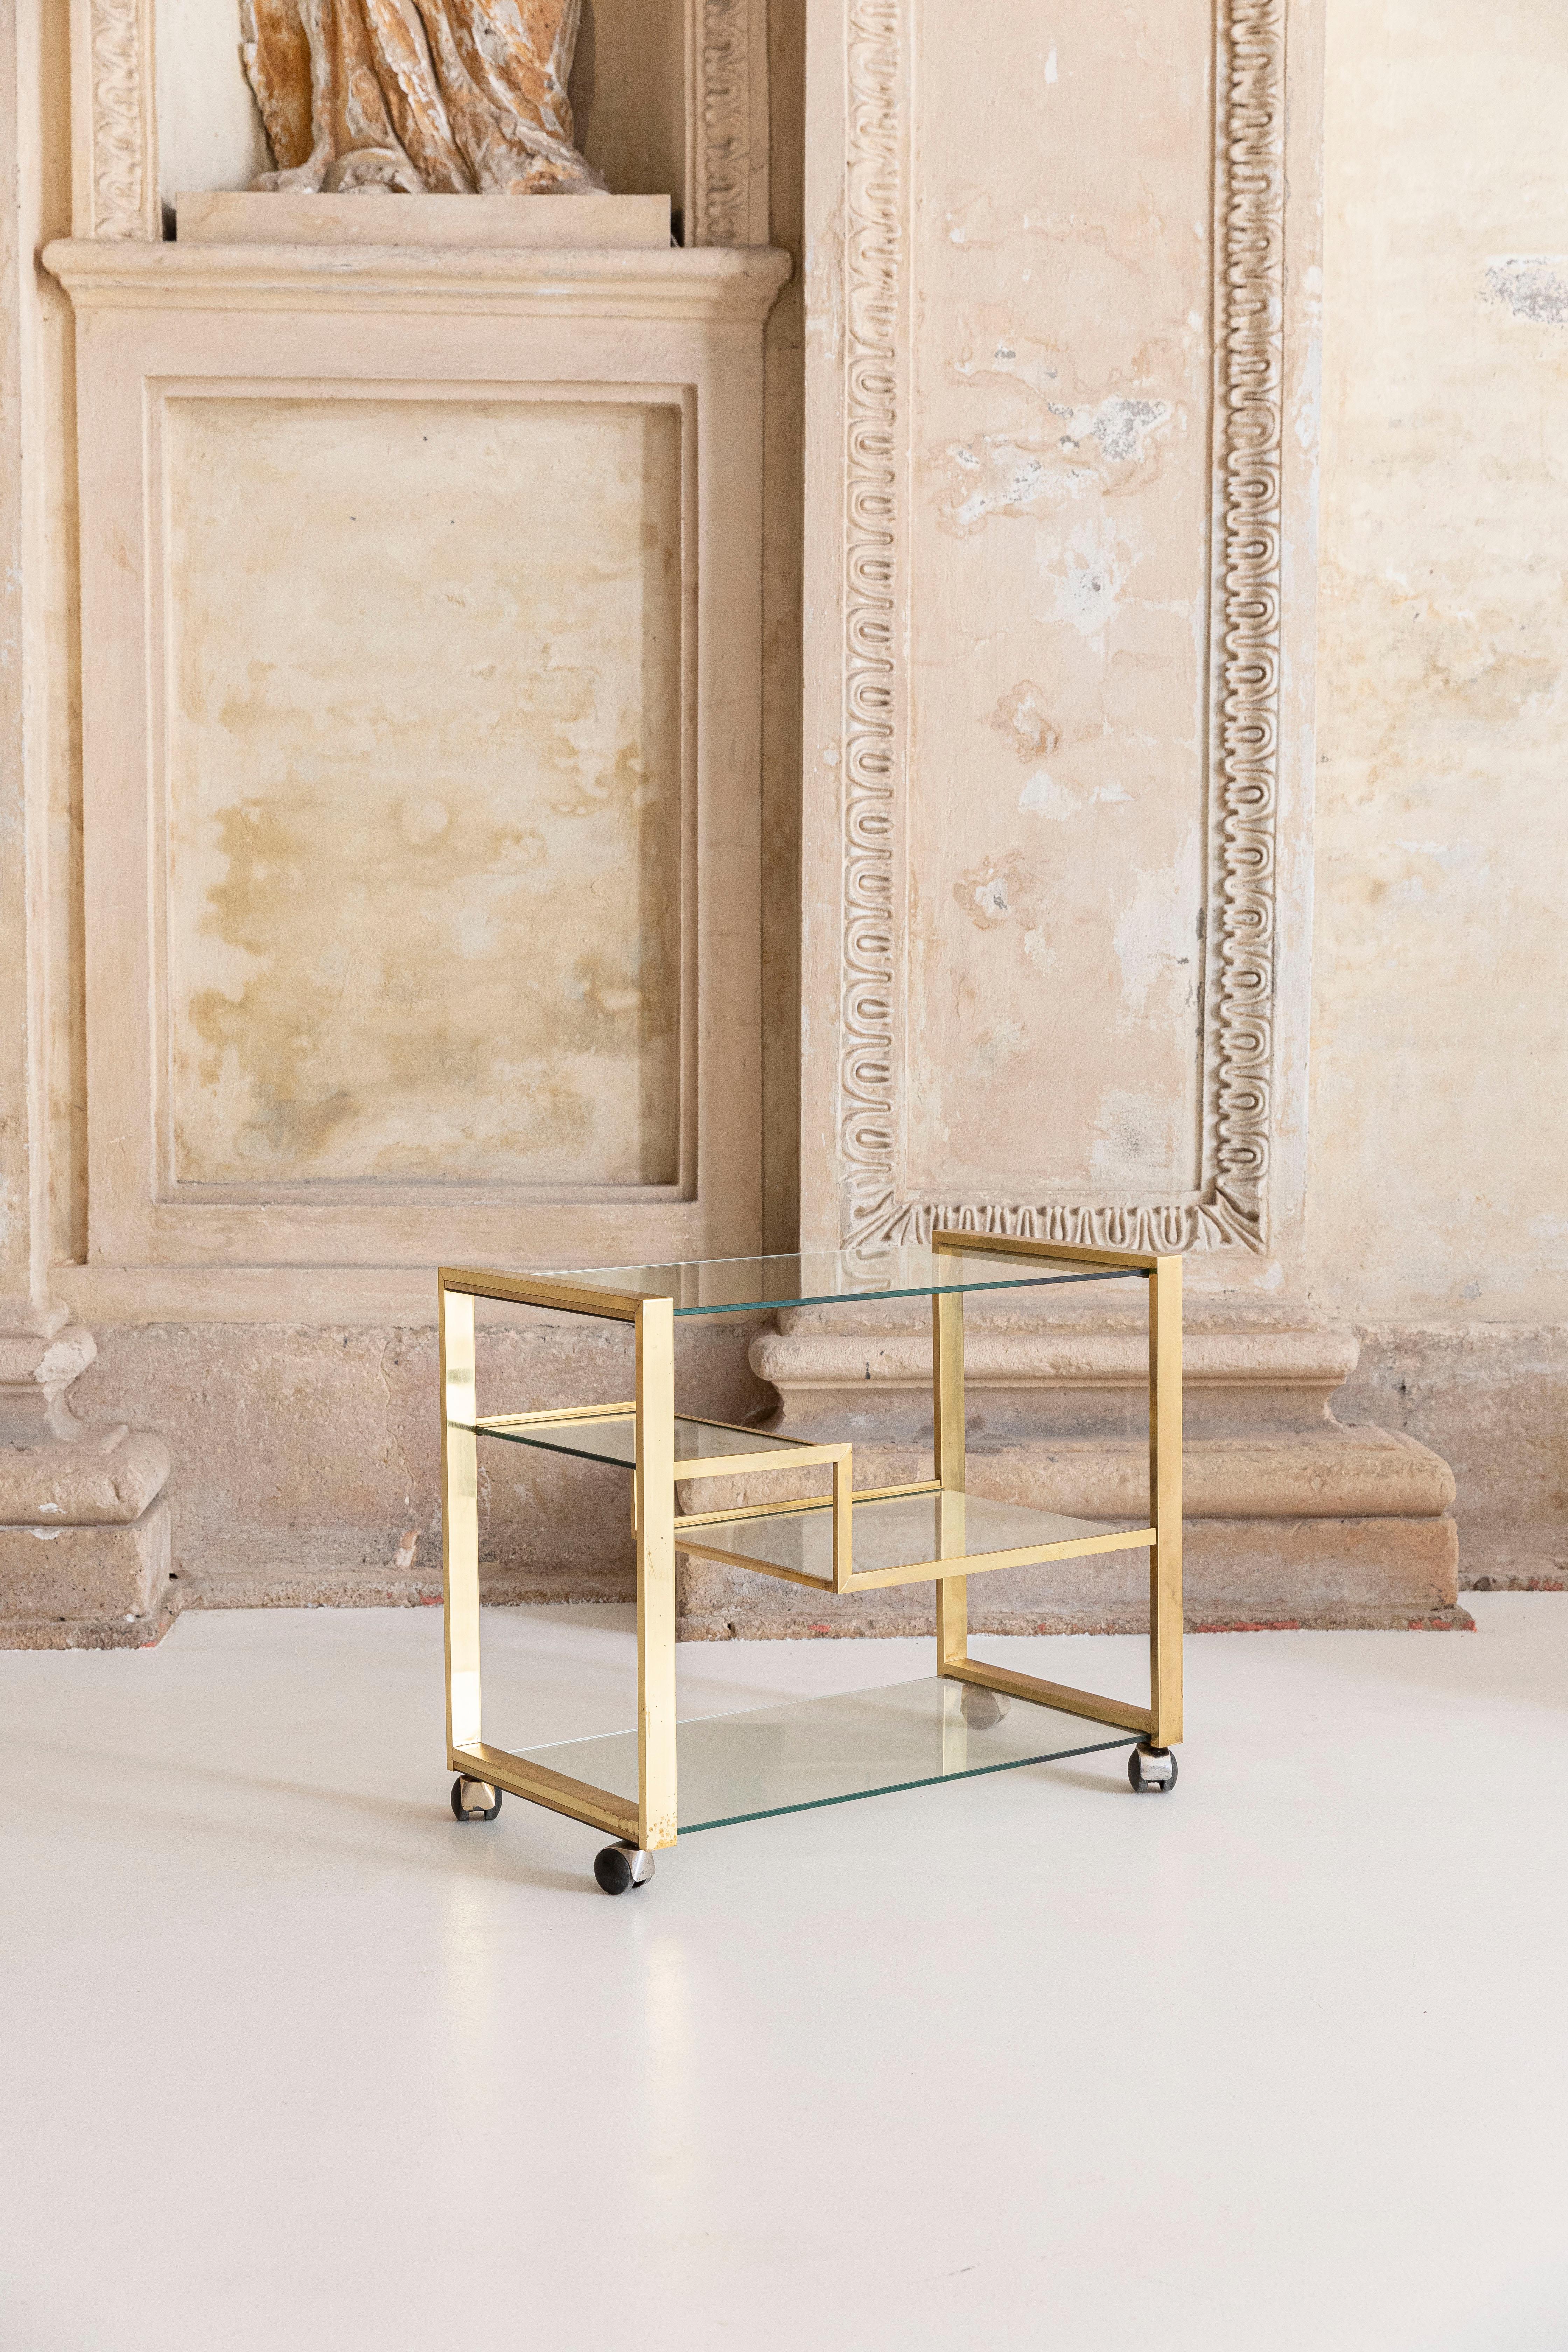 Elegant brass and glass bar cart with 4 glass shelves, sculptural tires.
Gabriella Crespi inspired.